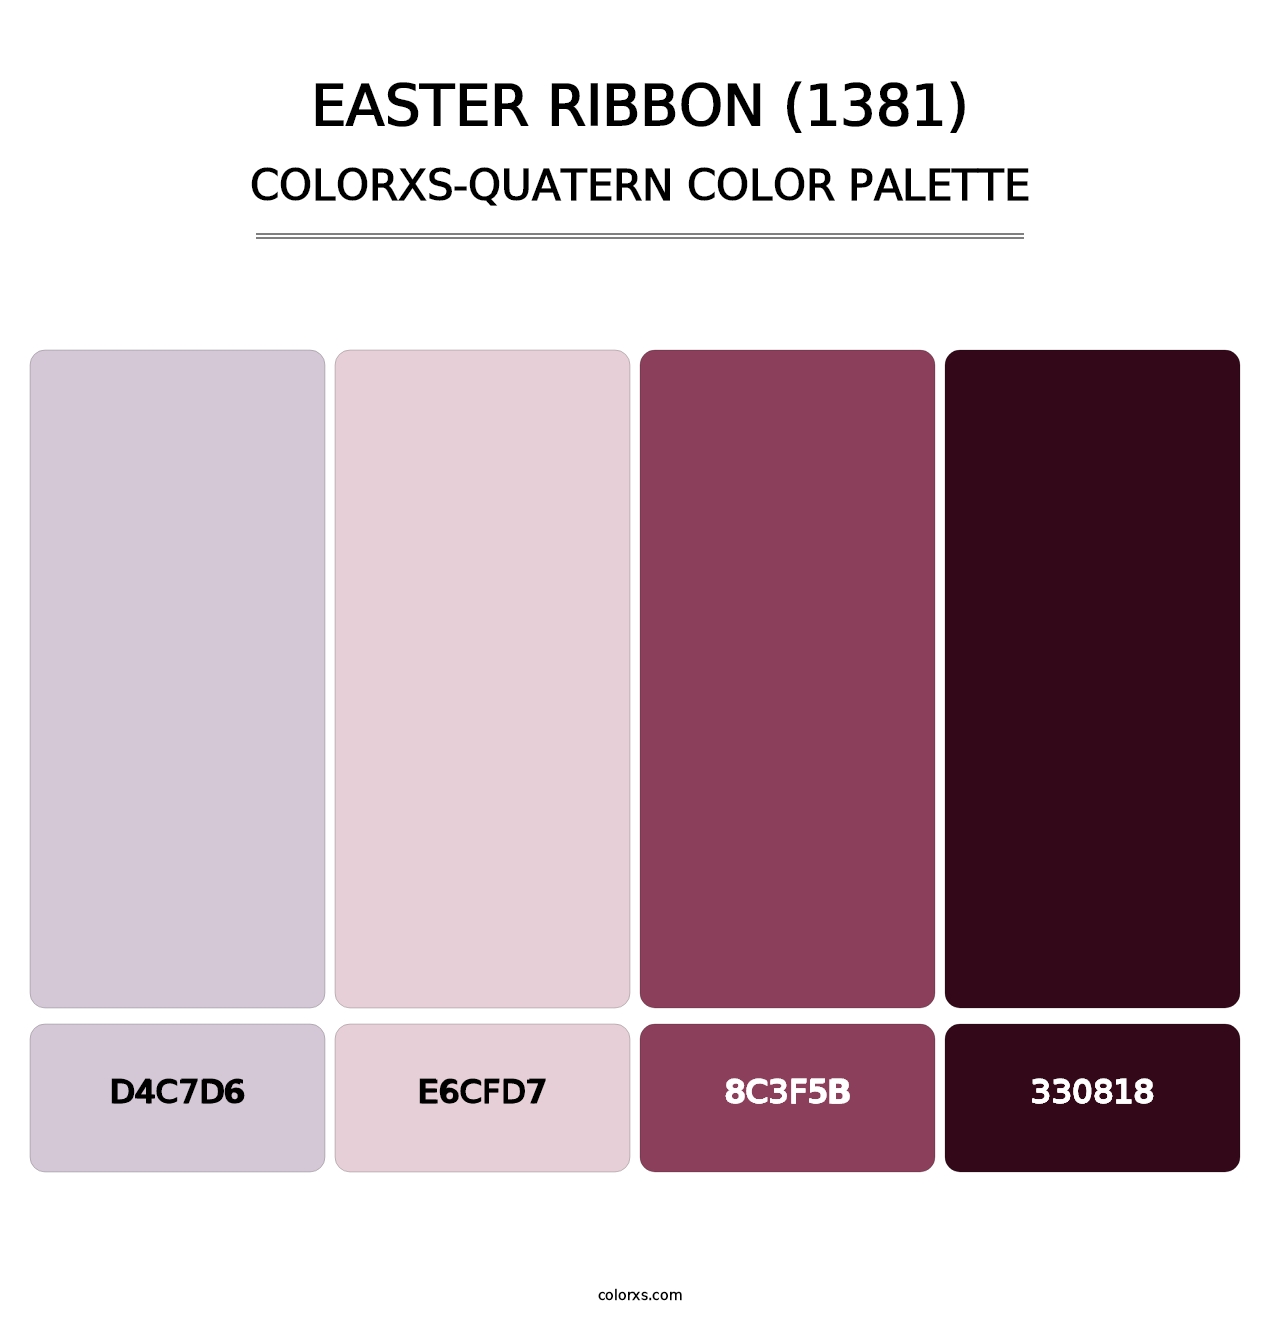 Easter Ribbon (1381) - Colorxs Quatern Palette